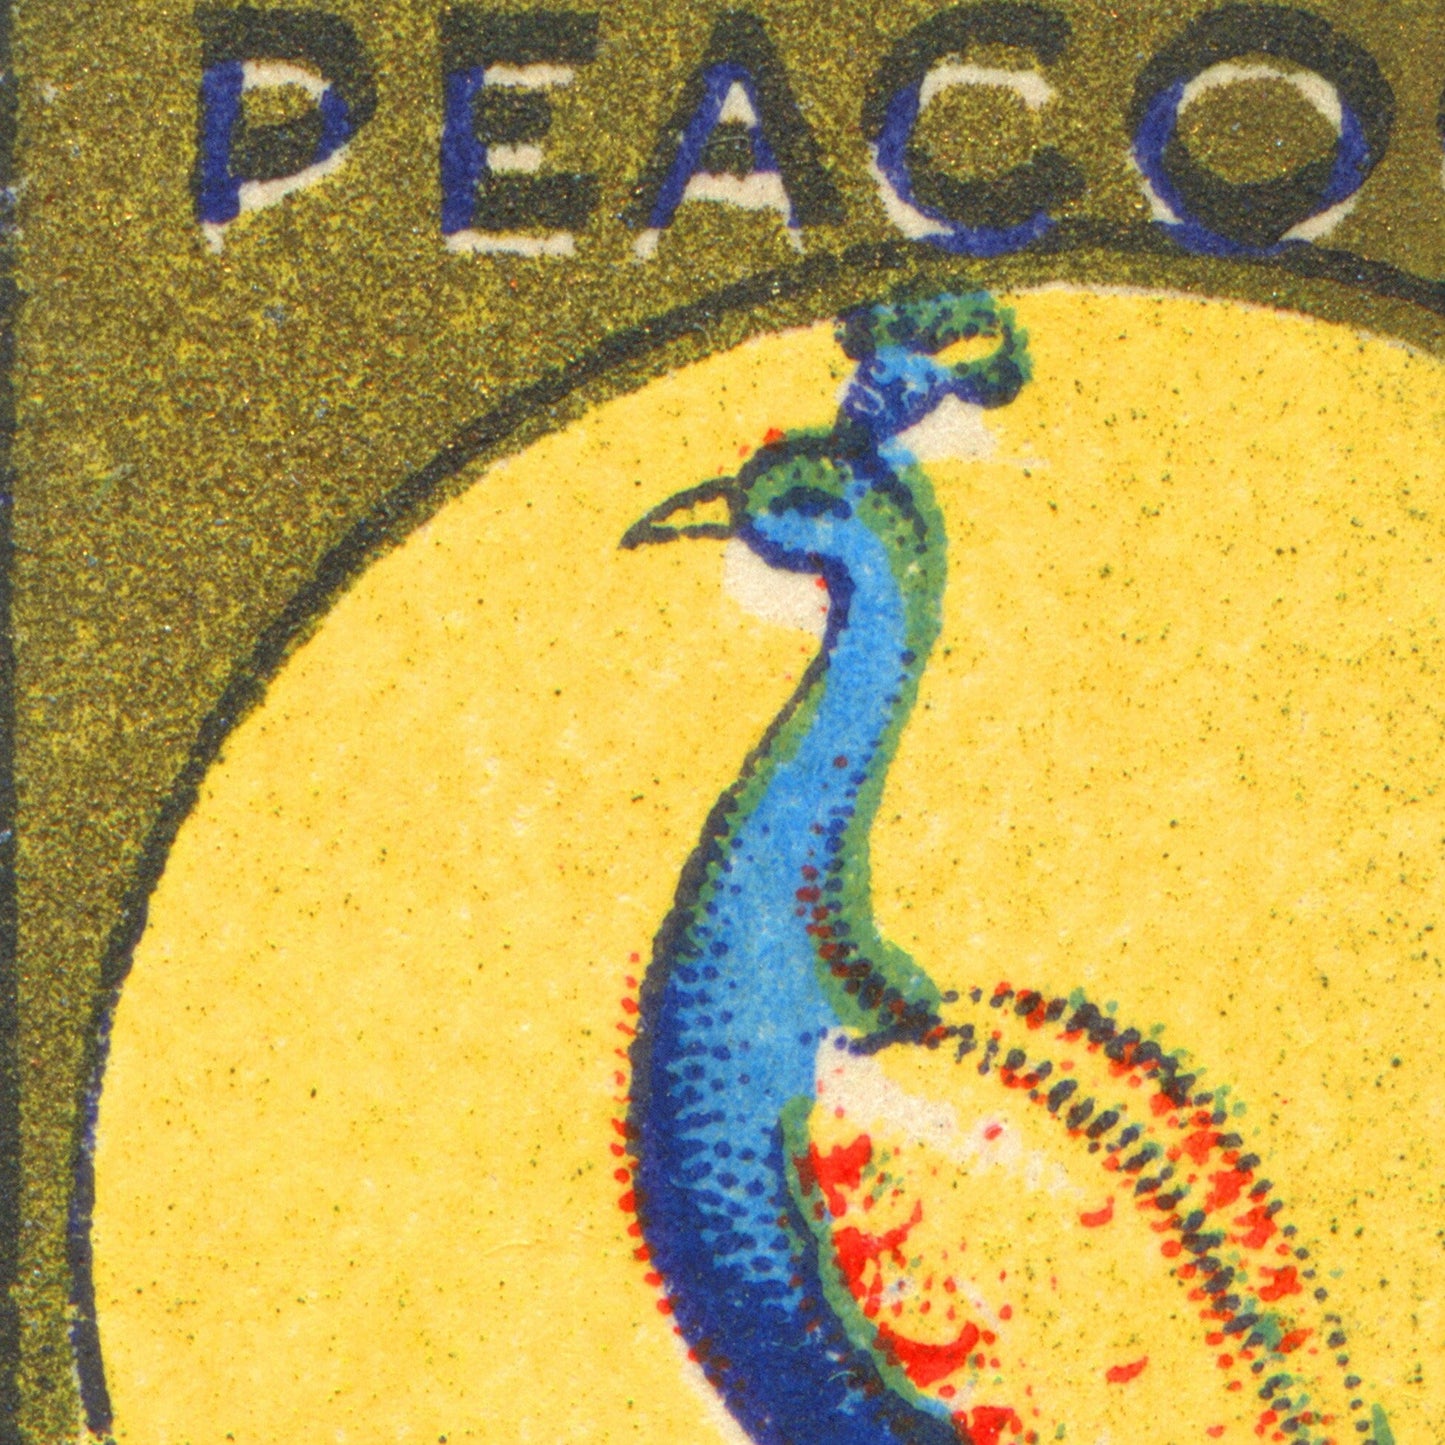 Antique Peacock Print | Large Bird Wall Art | Indian Print | Vintage Matchbox Illustration | Retro Decor | Boho Home